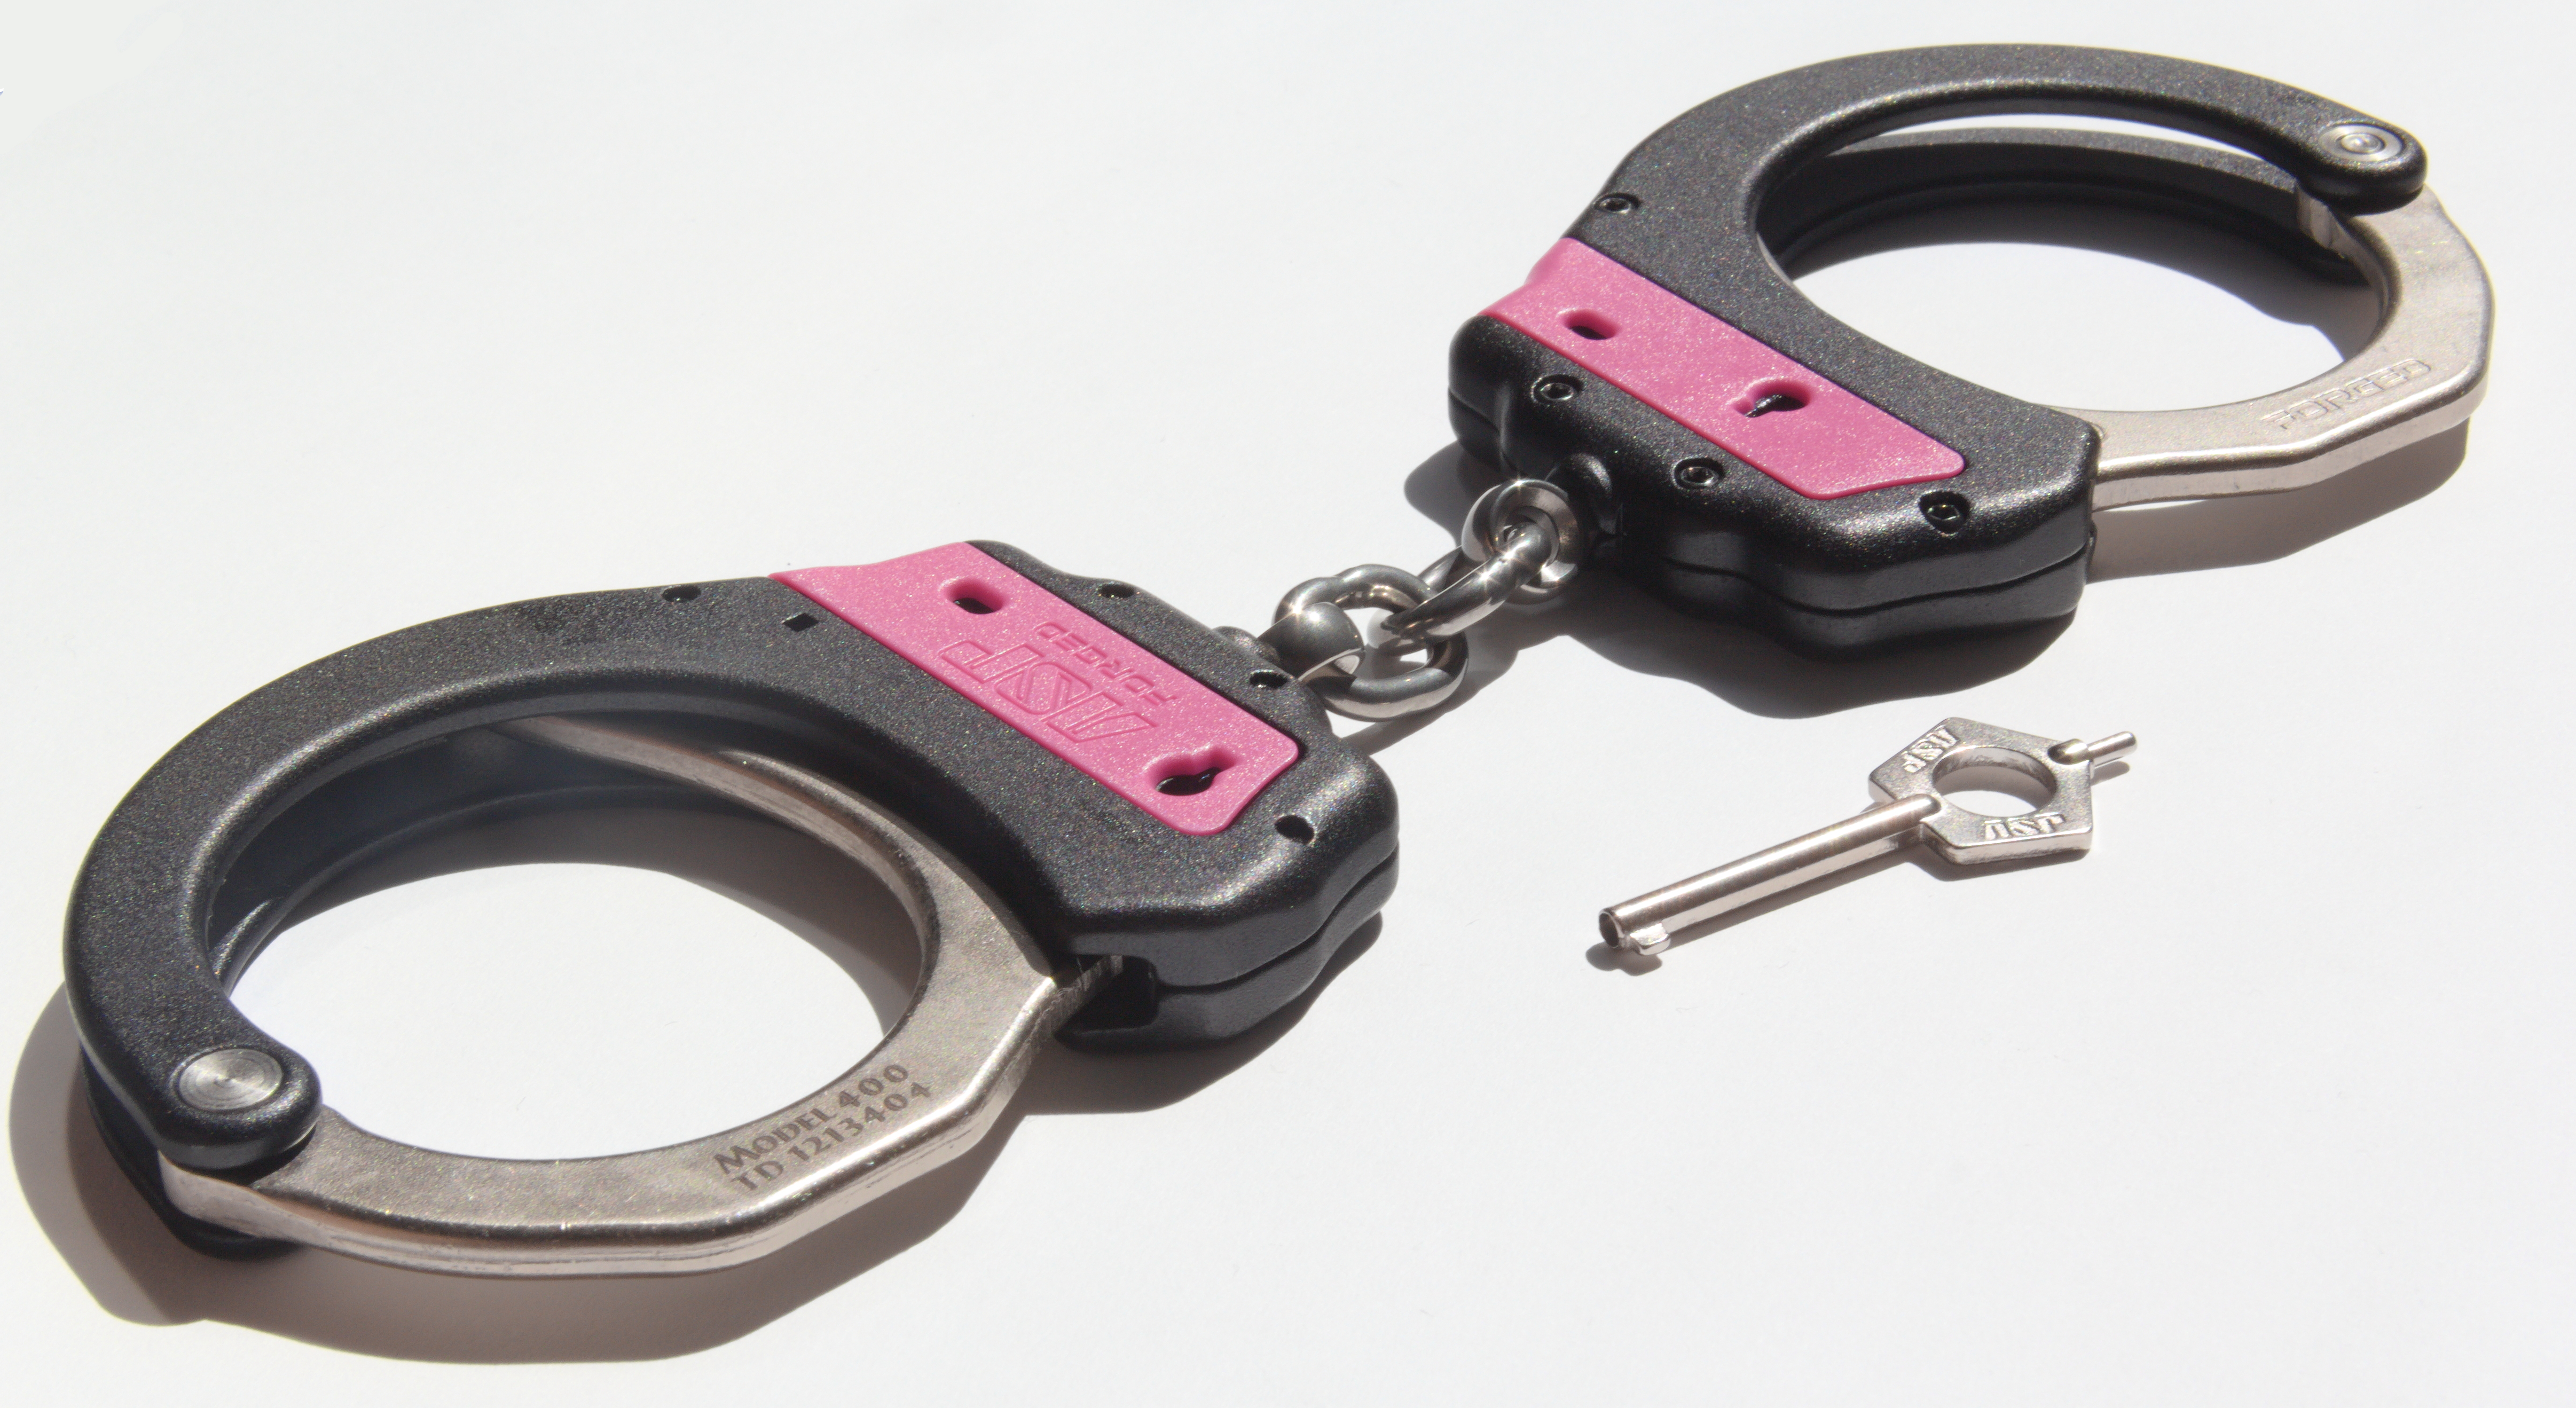 ASP Identifier Chain Ultra Cuffs Steel Pink (3 Pawl) - 66003 / Model 400 Pink